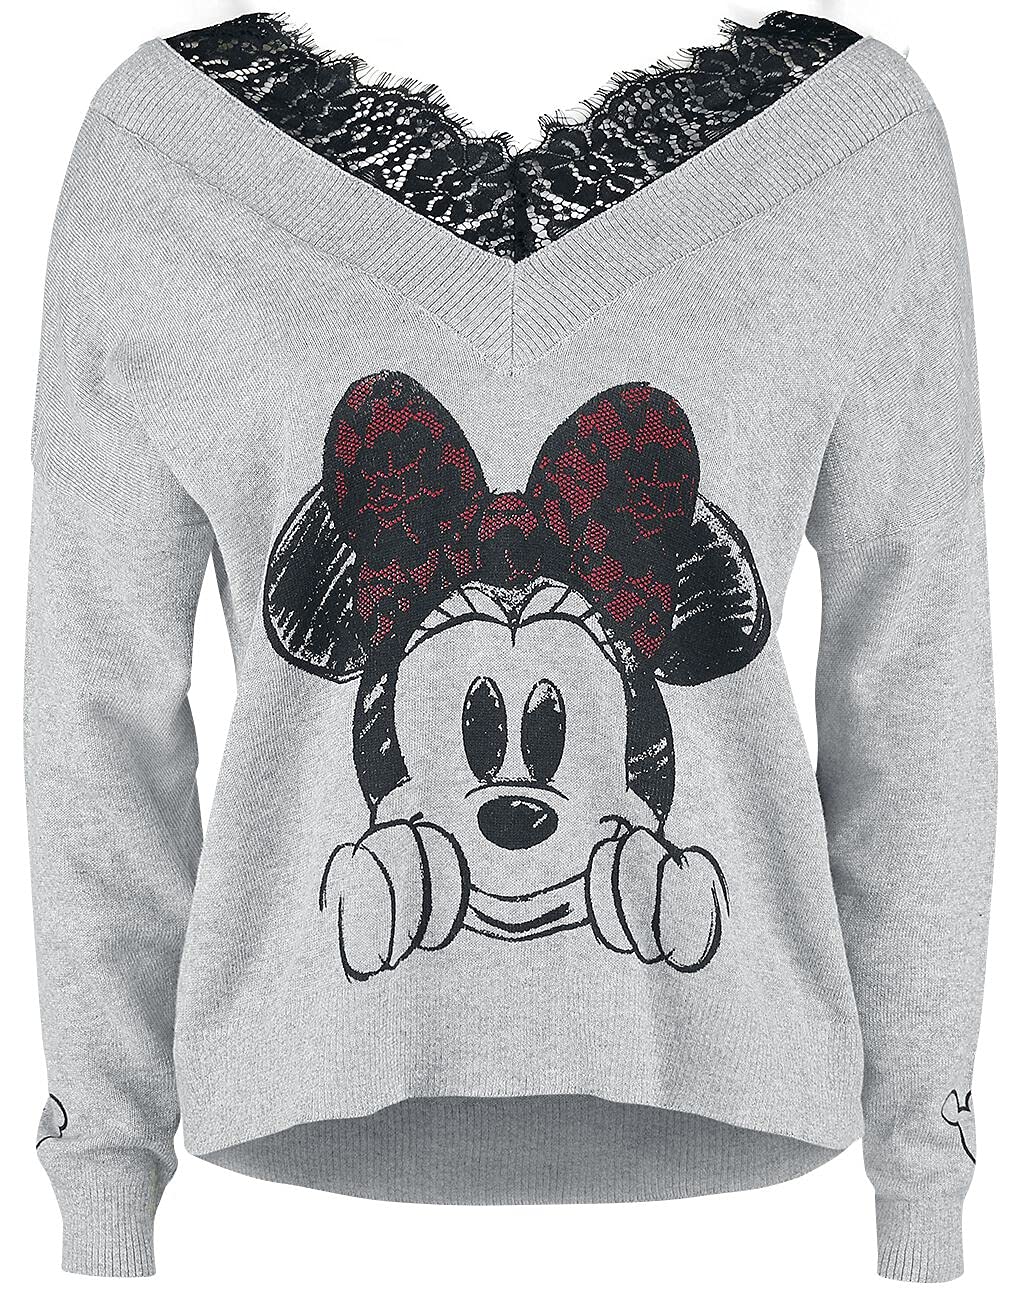 Mickey Mouse Minnie Maus Frauen Sweatshirt grau meliert S